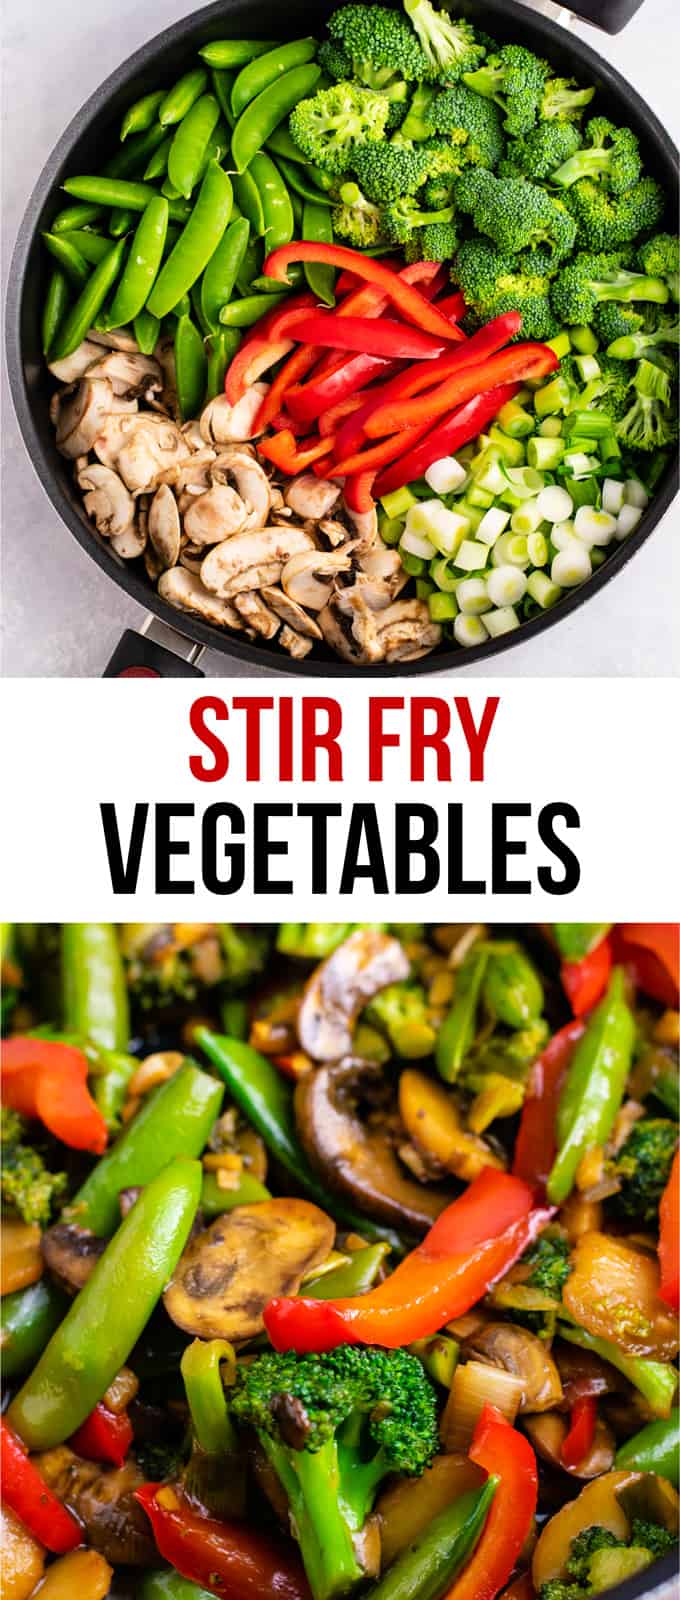 STIR FRY VEGETABLES - FOOD AND DRINK